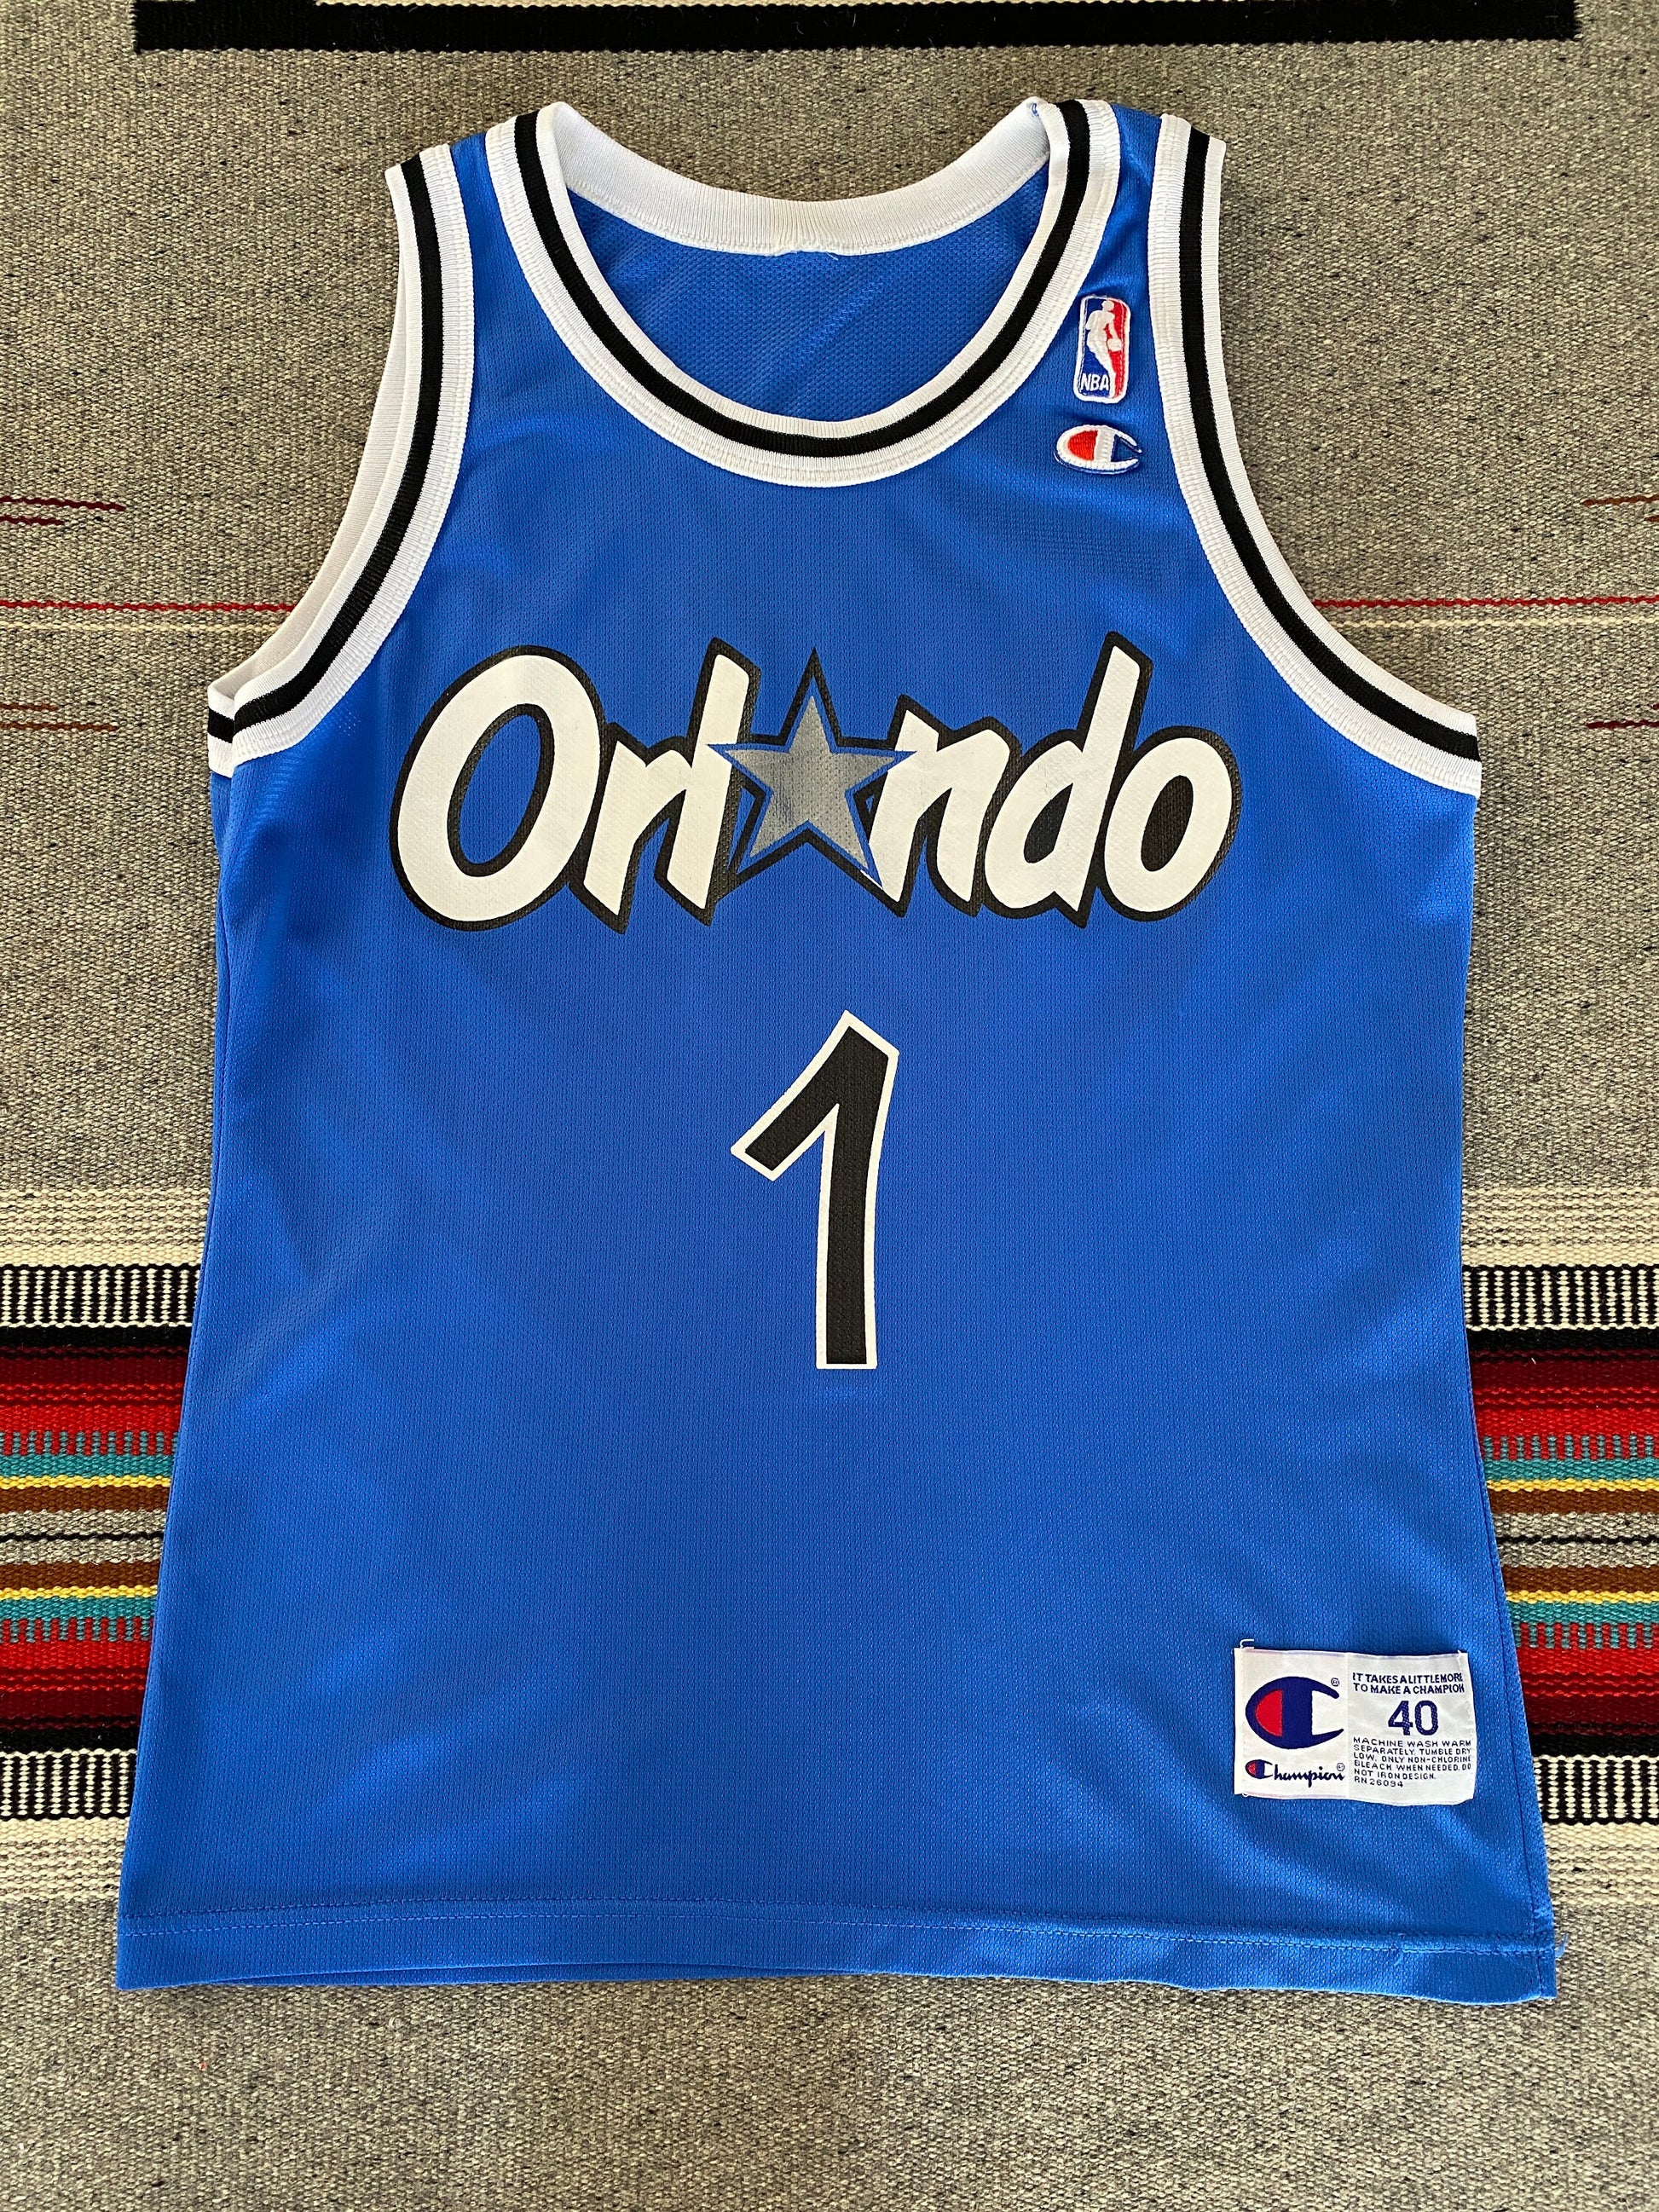 Authentic 90s Champion NBA Jersey - #1 Hardaway Orlando - Size 40